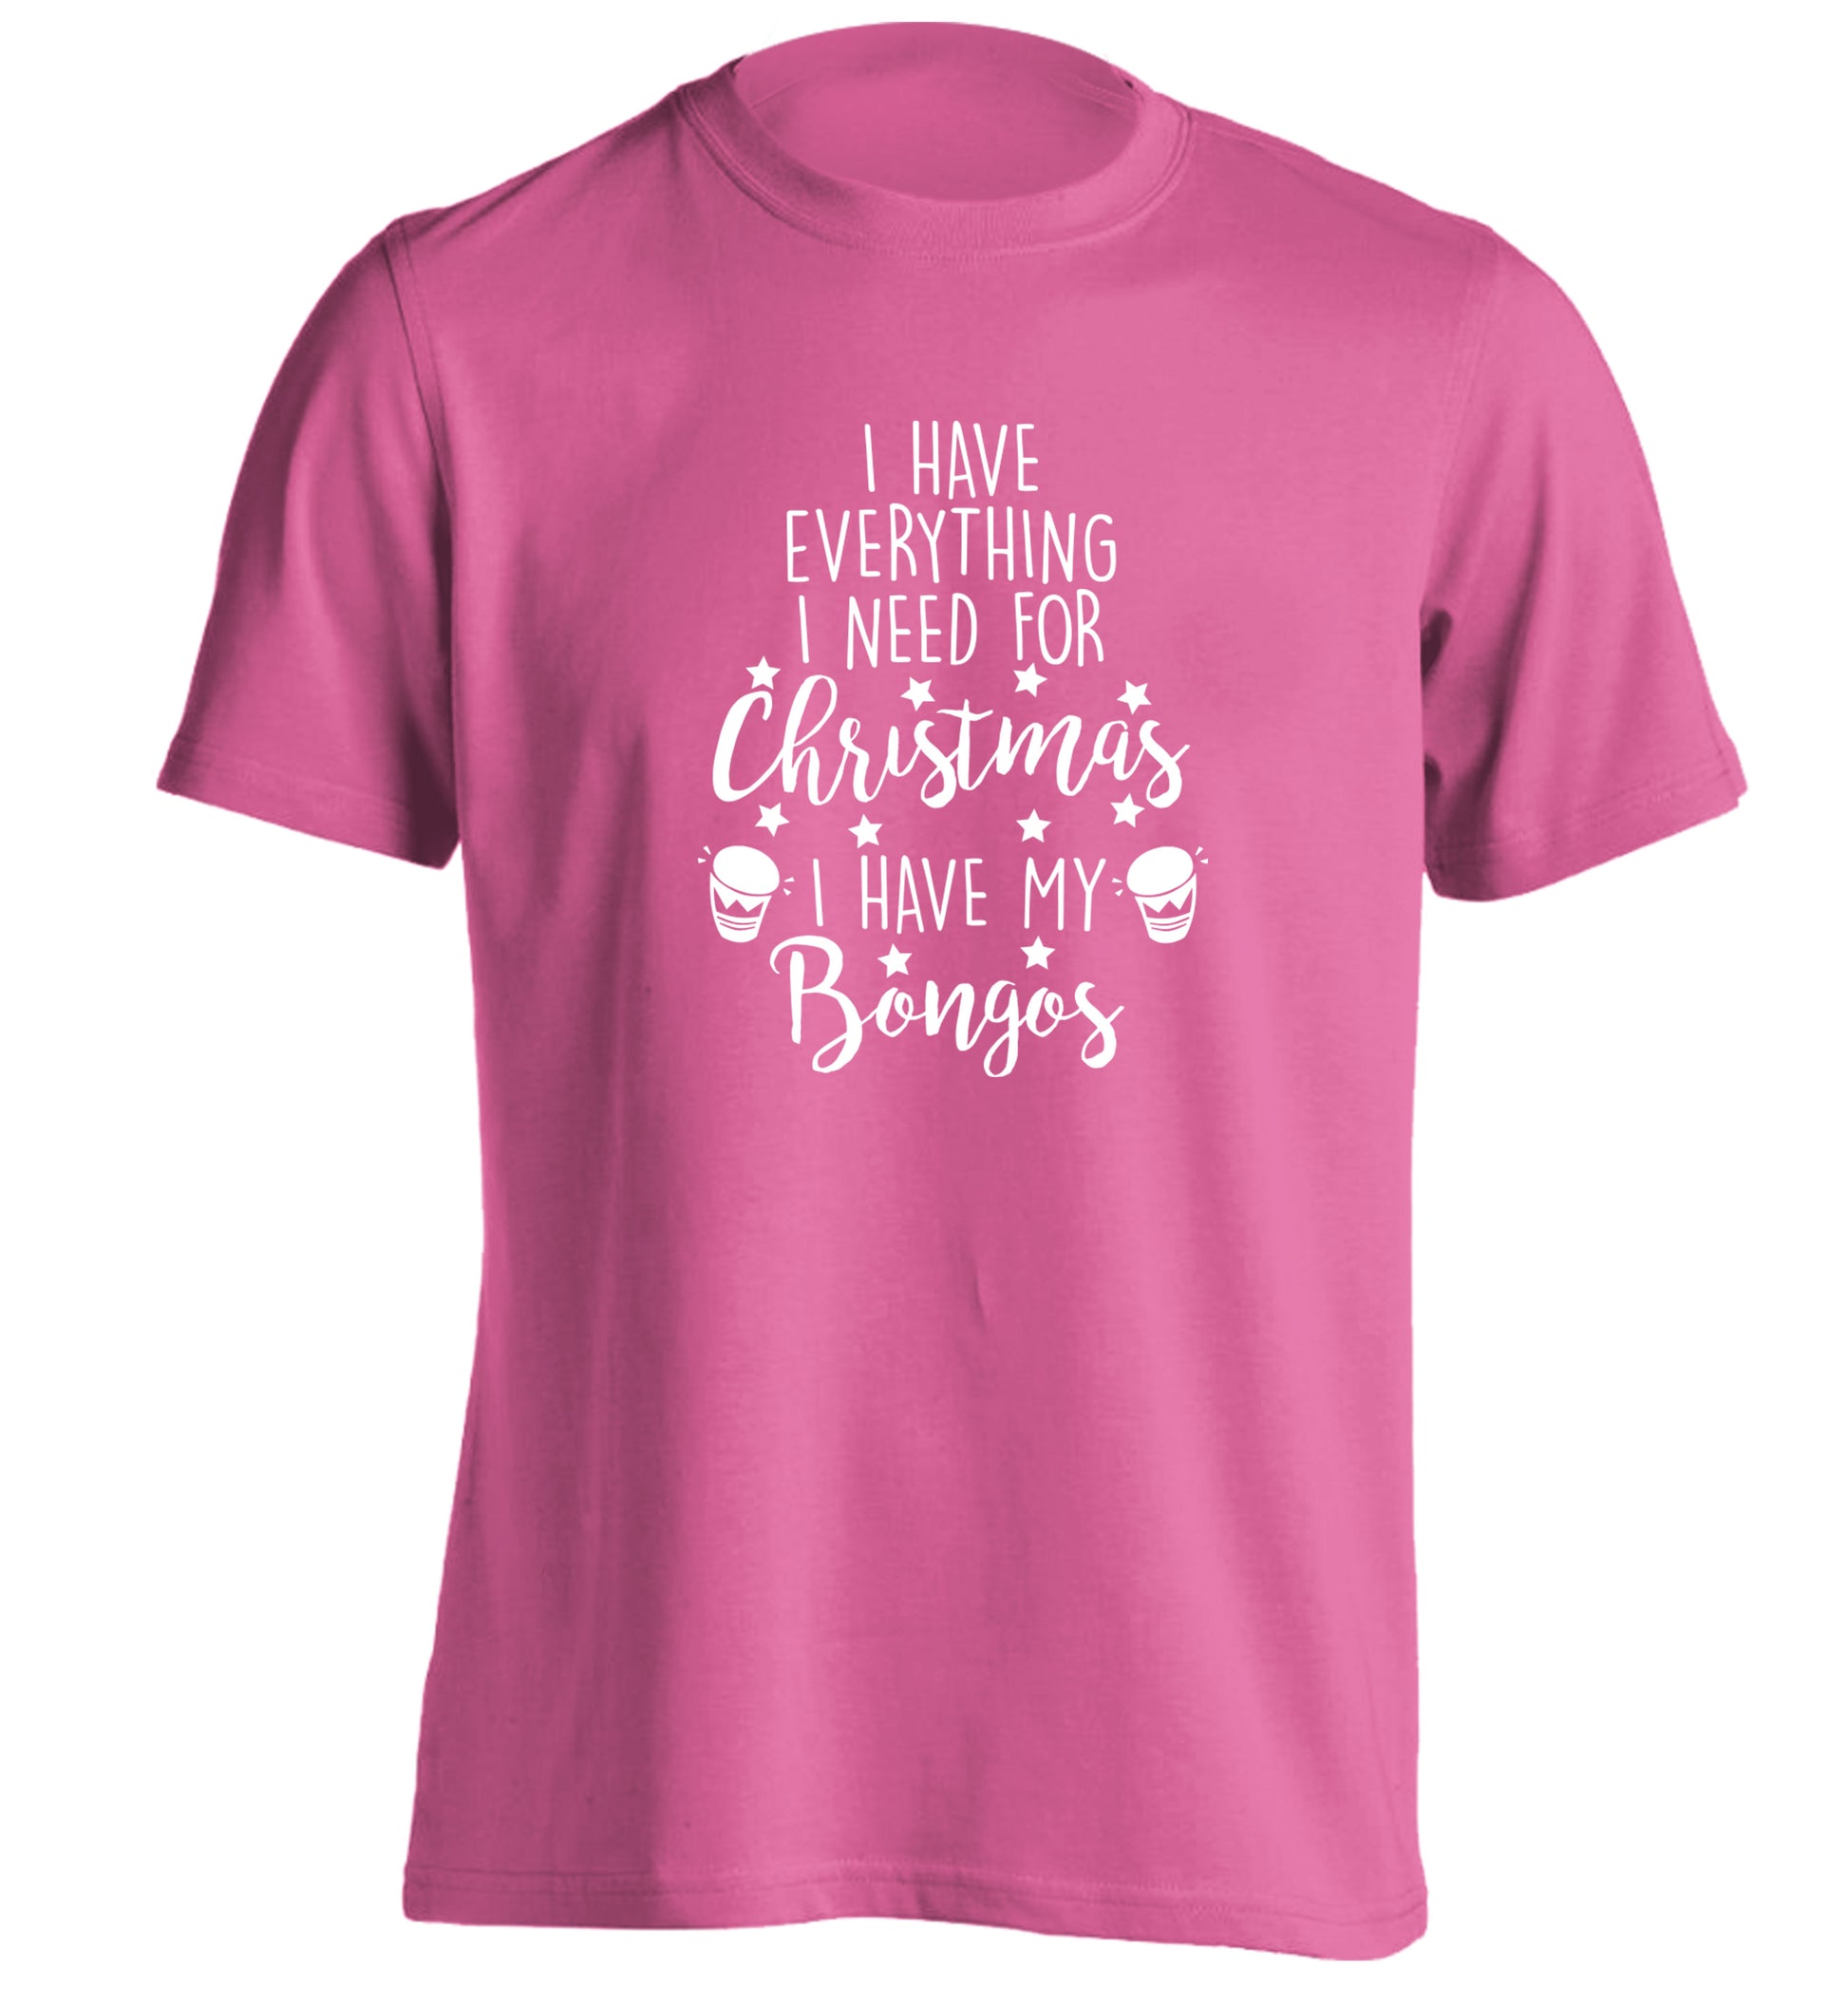 I have everything I need for Christmas I have my bongos! adults unisex pink Tshirt 2XL